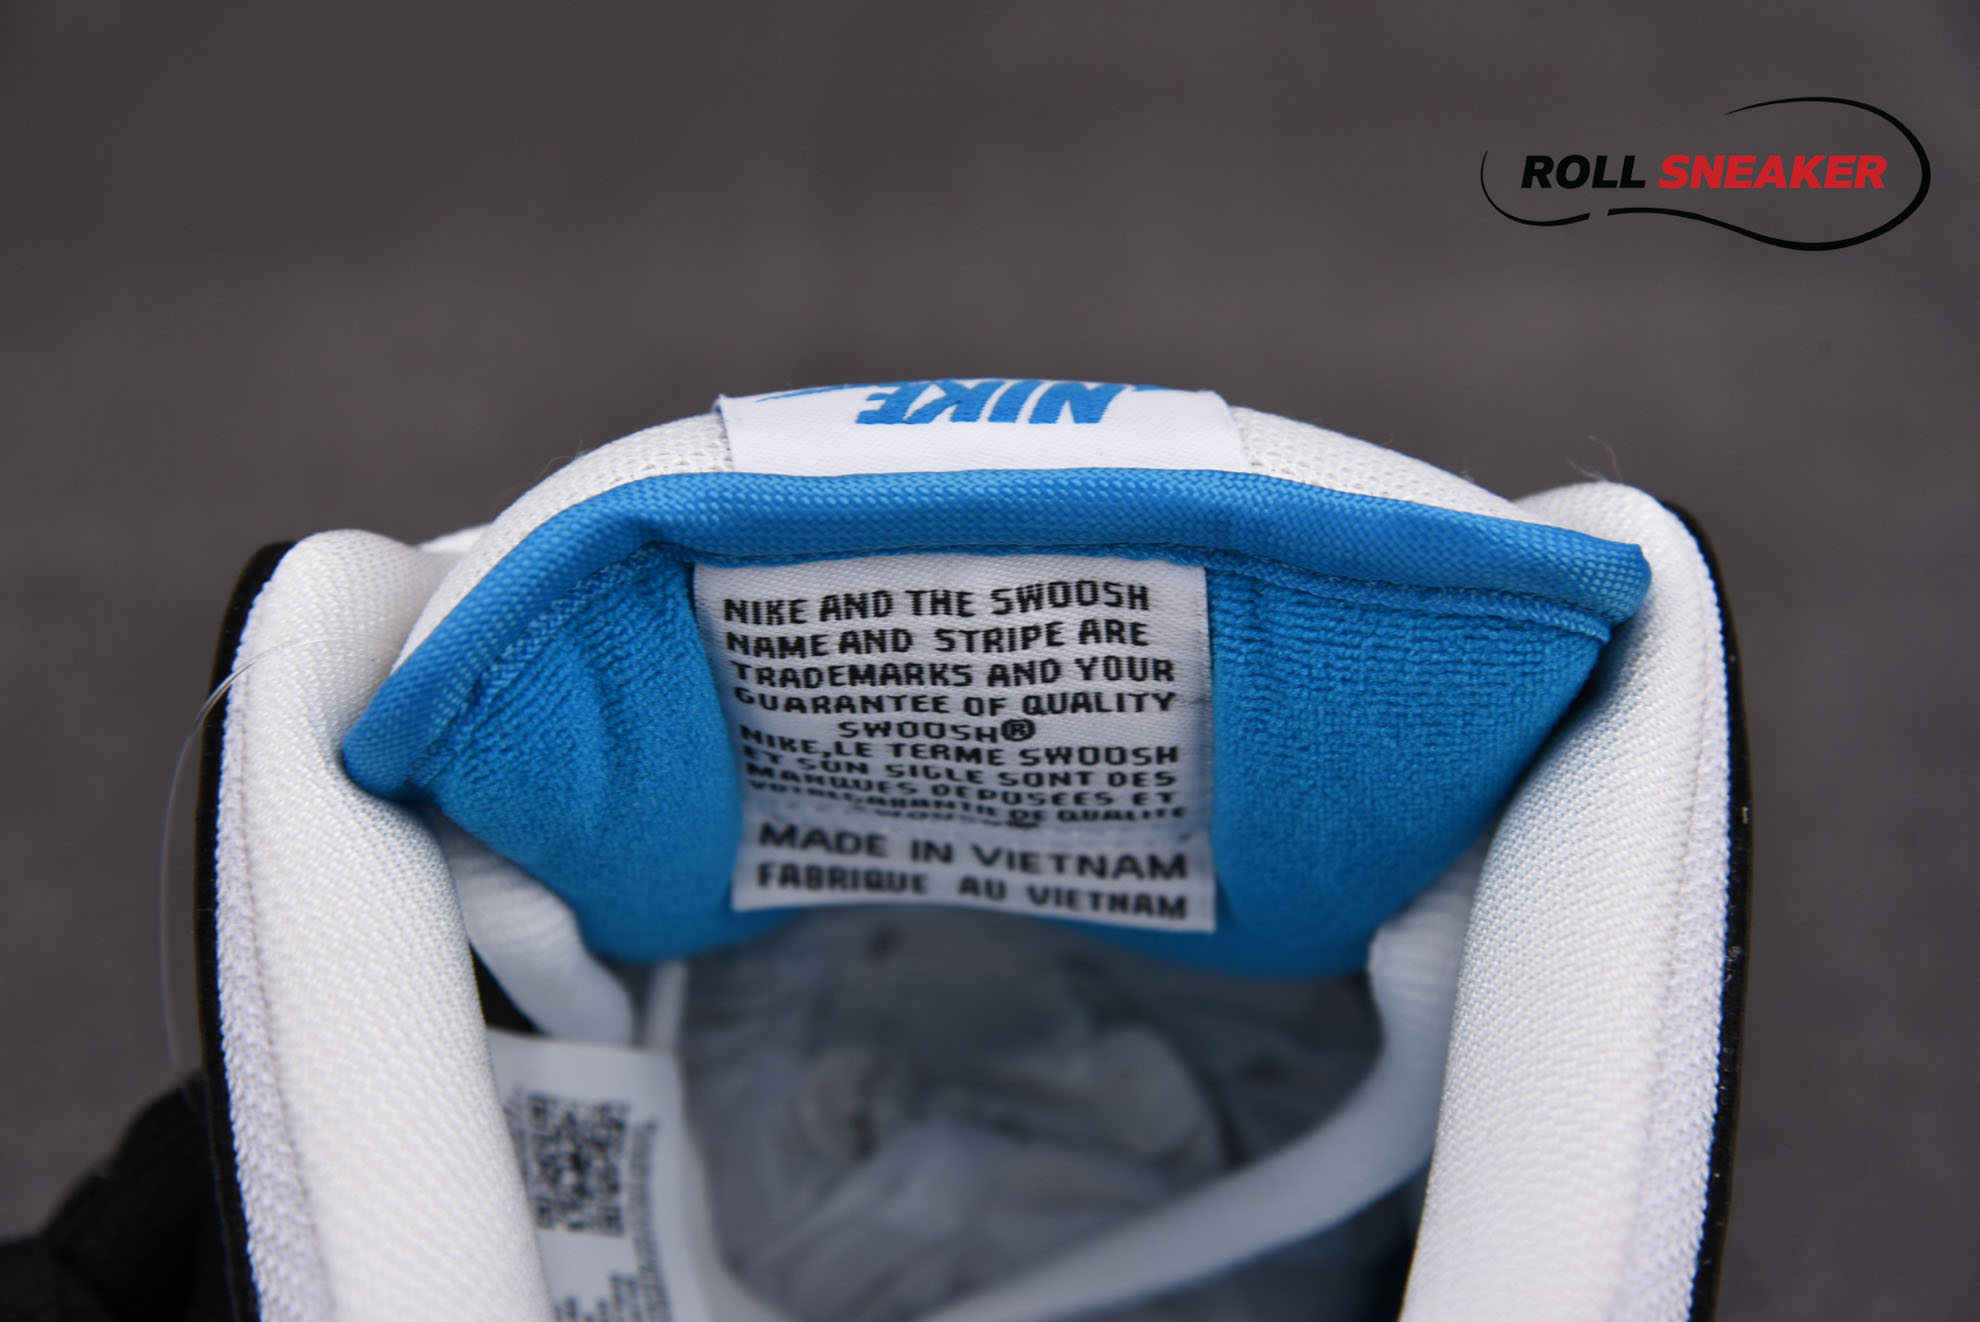 Nike Dunk Low Pro SB ‘Laser Blue’